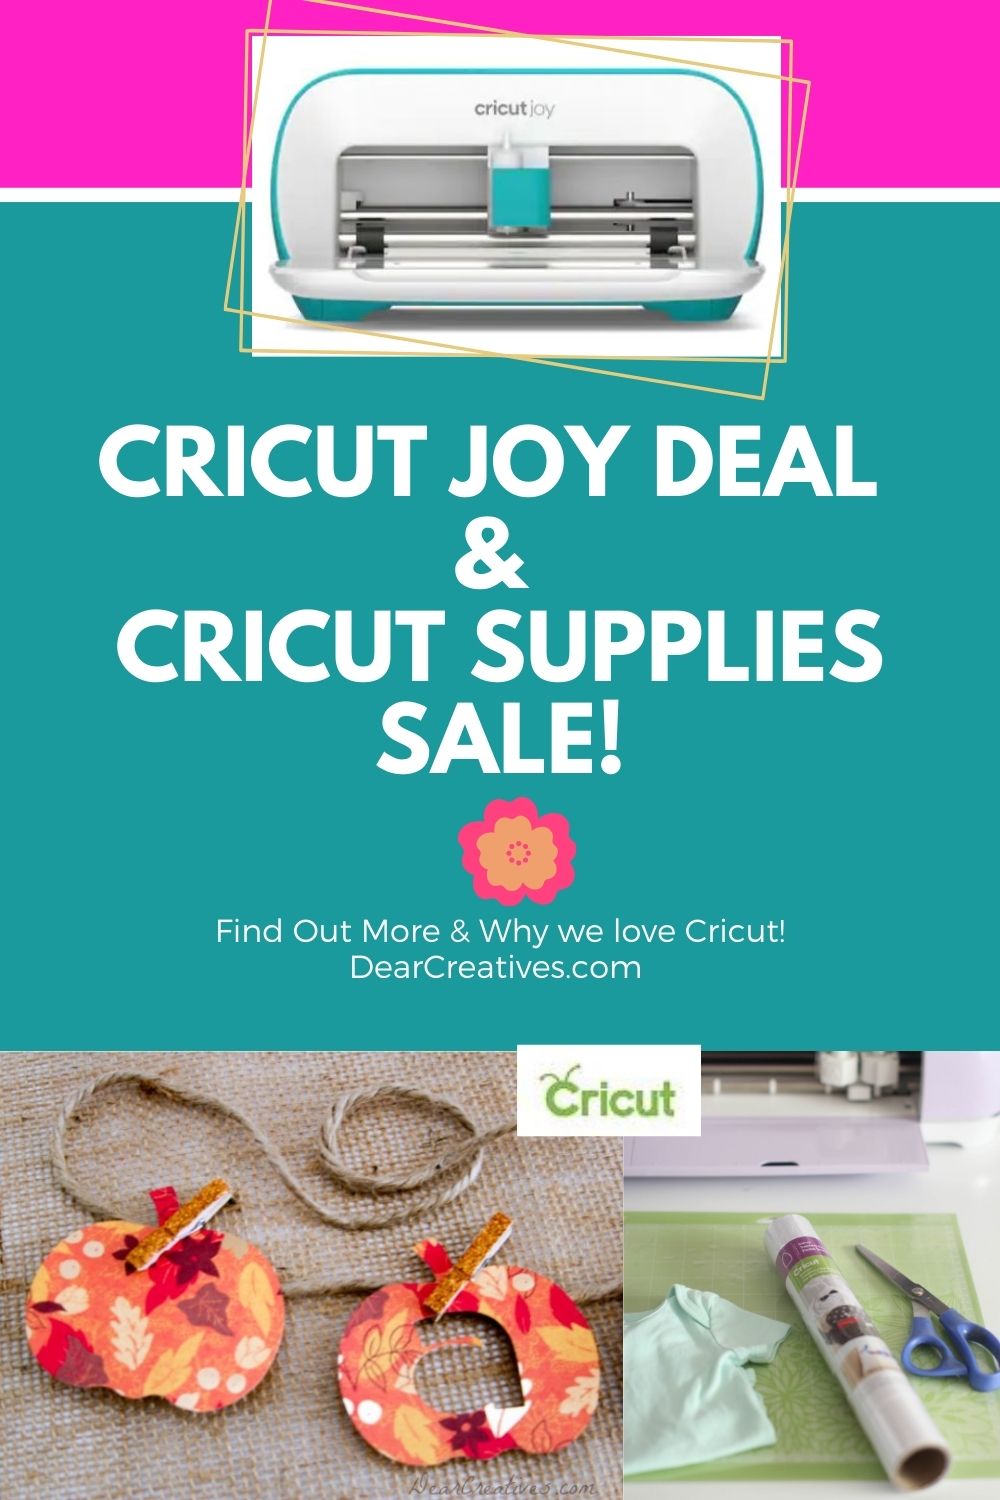 Cricut Deals, Cricut Joy, Cricut Maker, And Supplies On Sale!